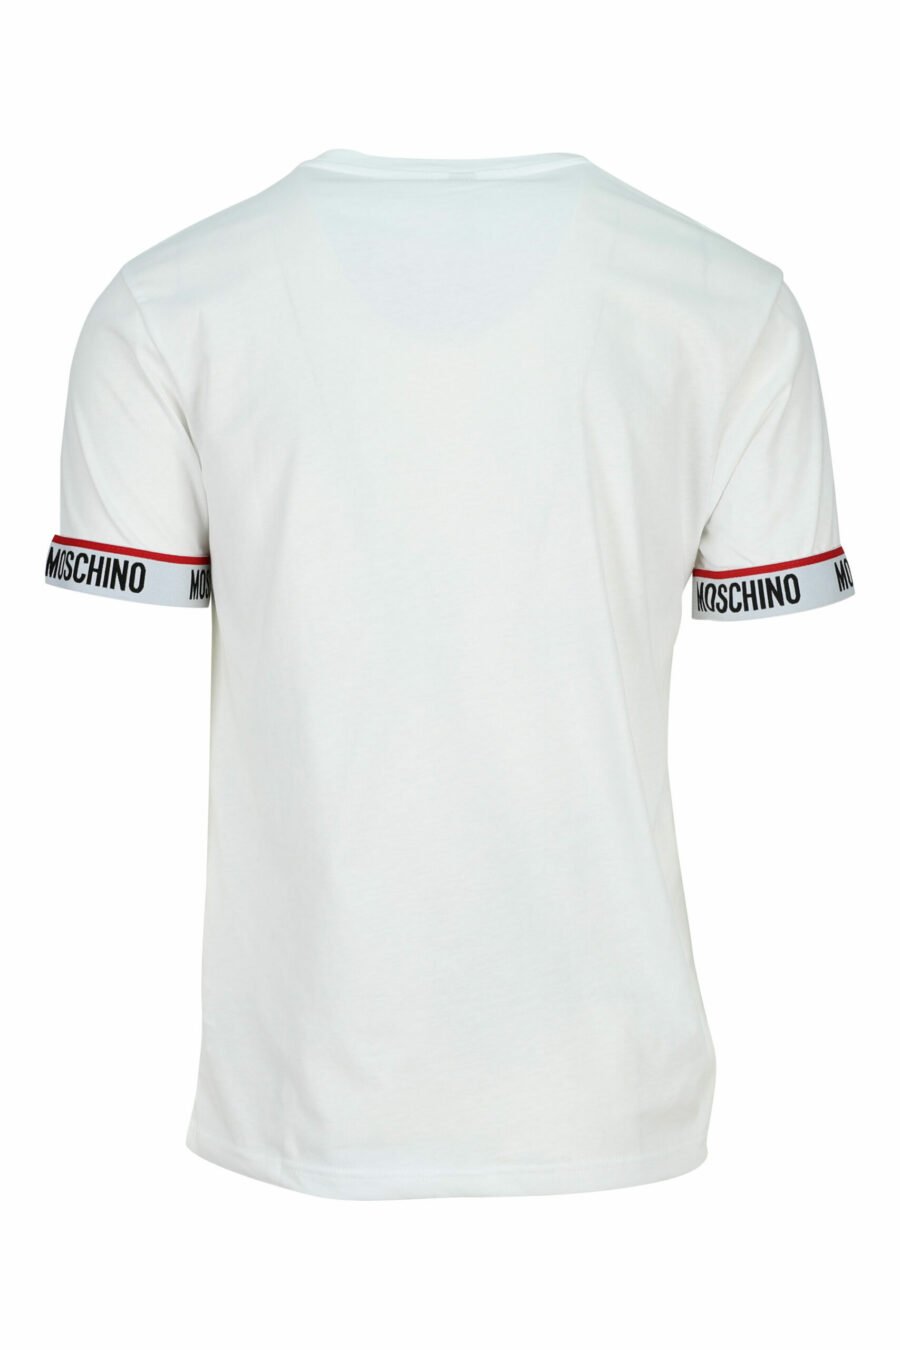 Camiseta blanca con logo blanco en mangas - 667113604565 1 scaled